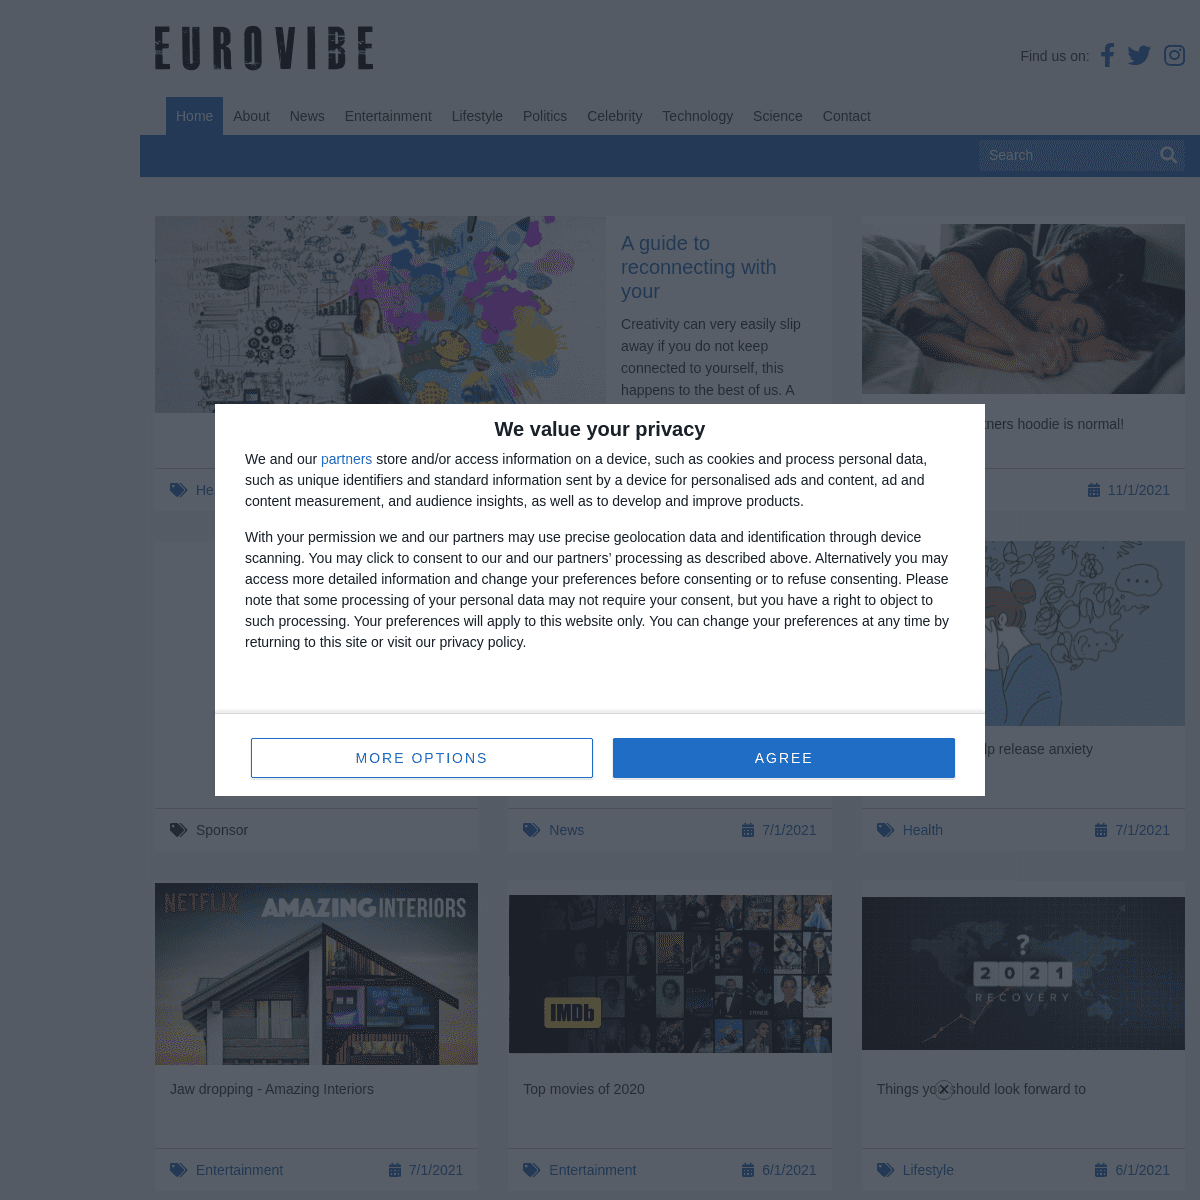 A complete backup of https://eurovibe.net